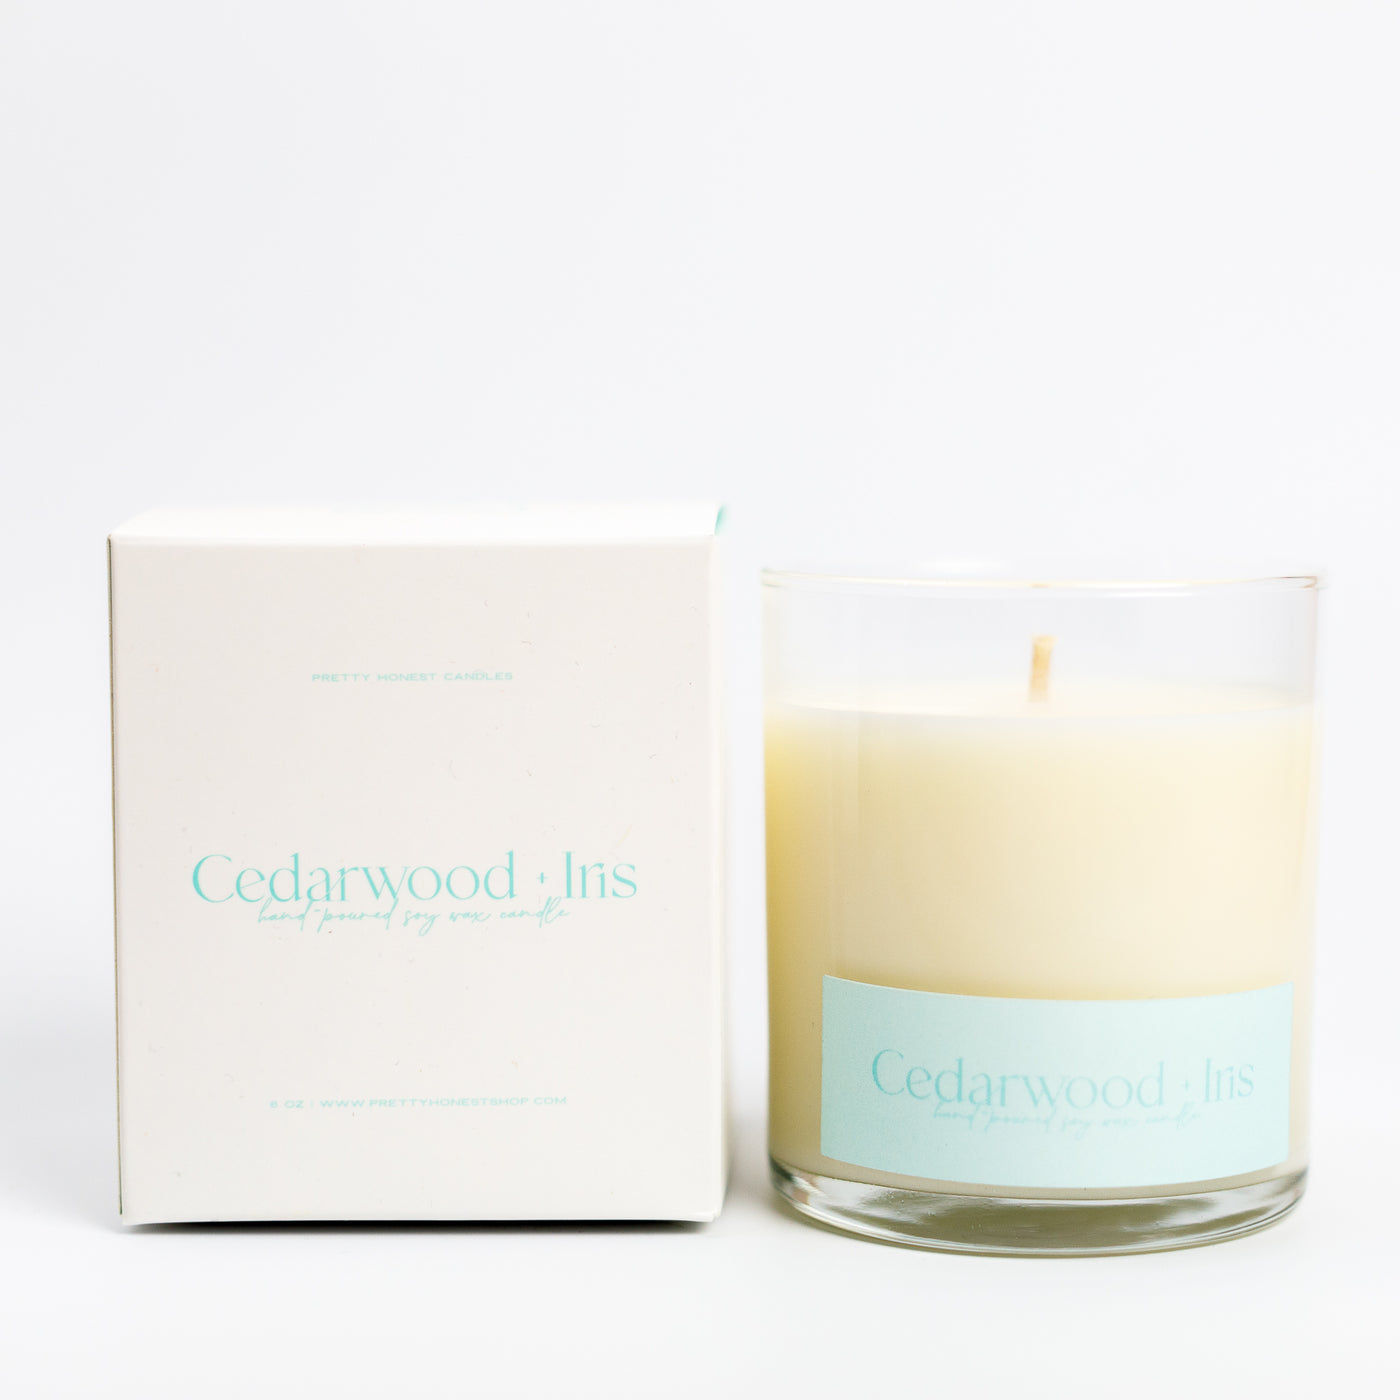 Cedarwood + Iris Soy Candle